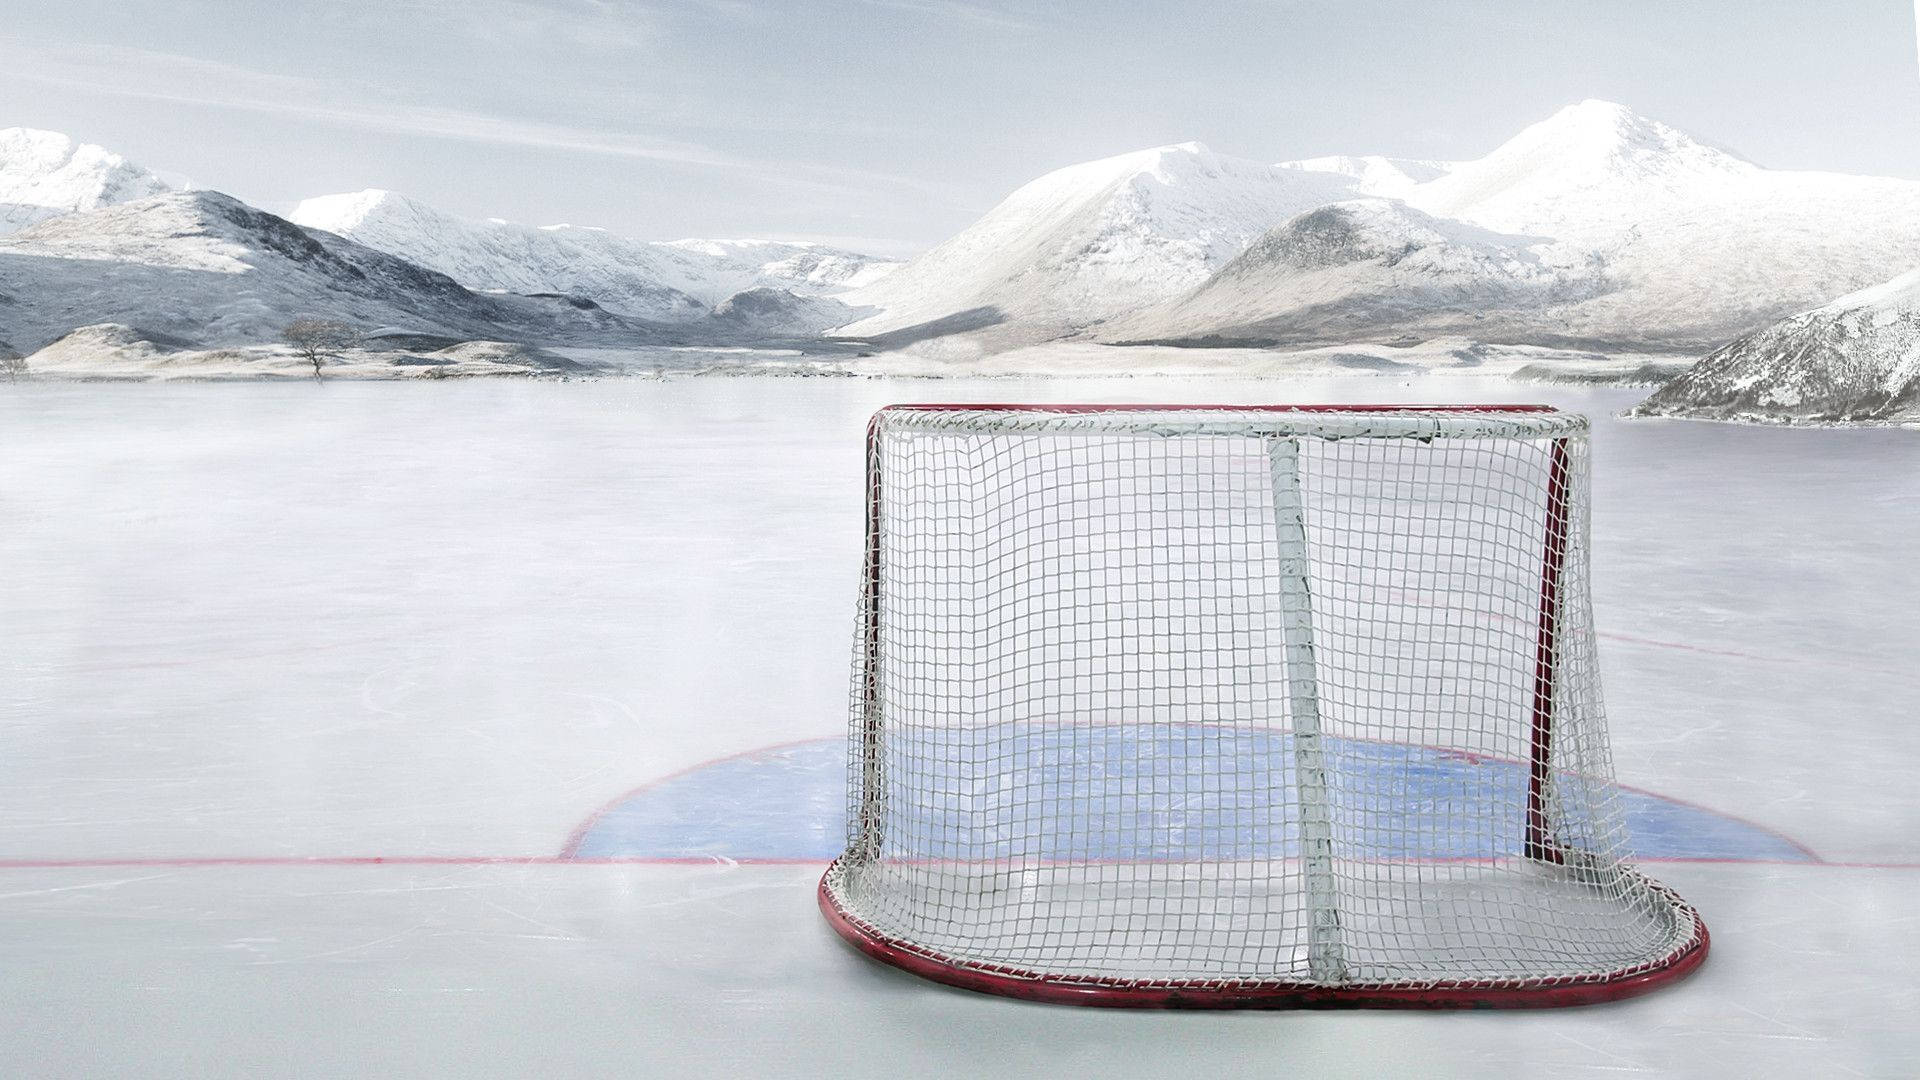 Ice Hockey Gate On Snow Background